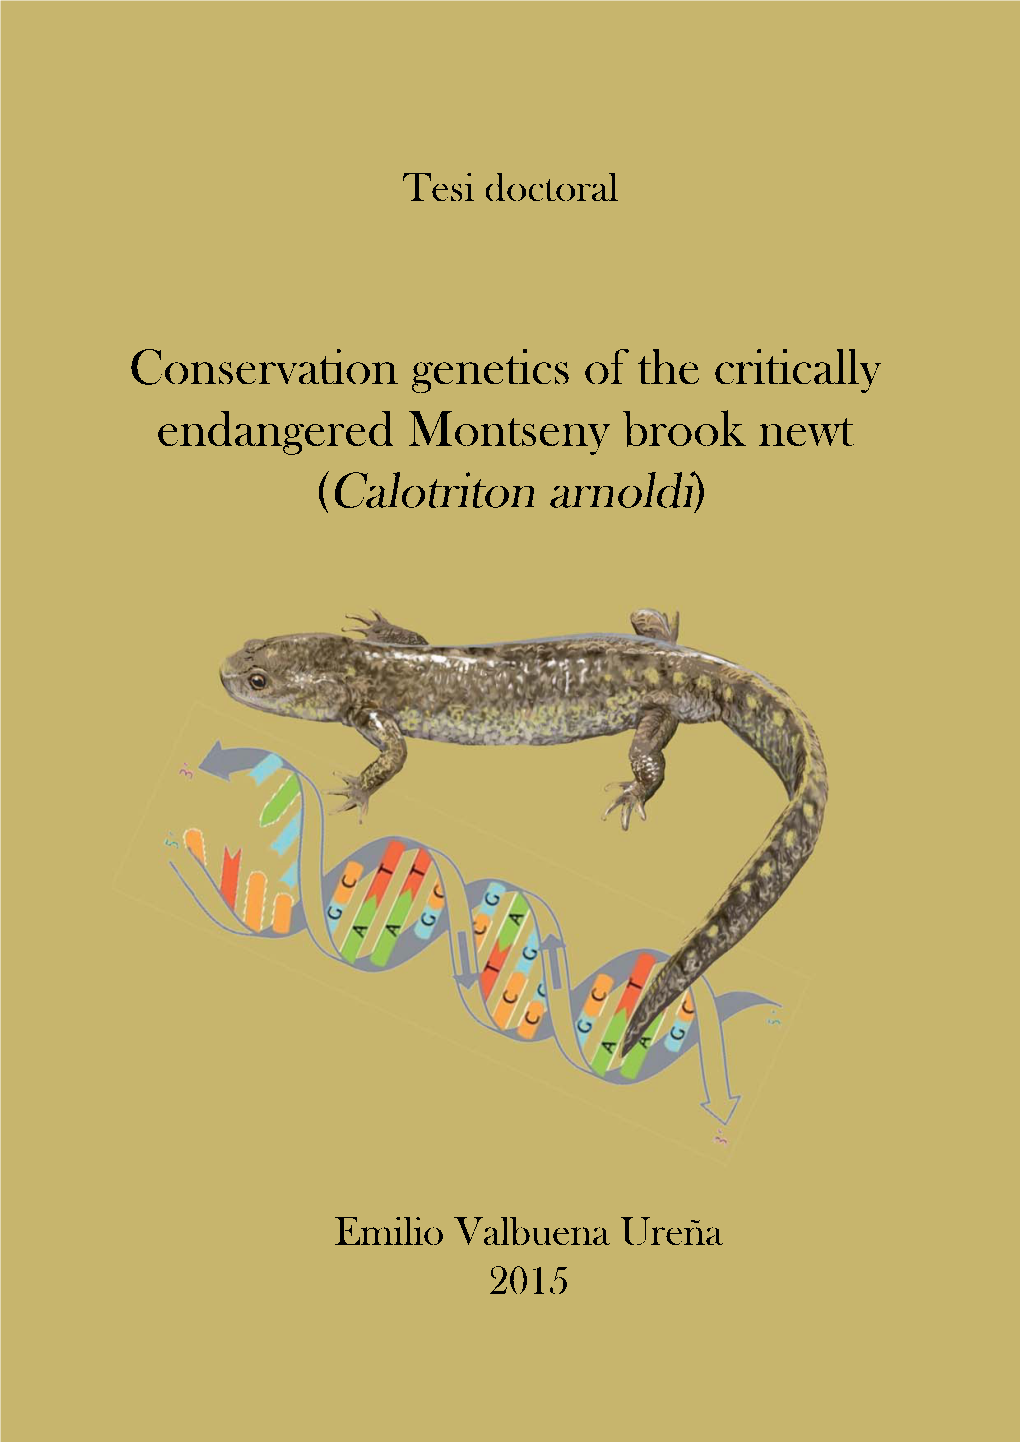 Calotriton Arnoldi) and Its Implicacions for Species Conservation